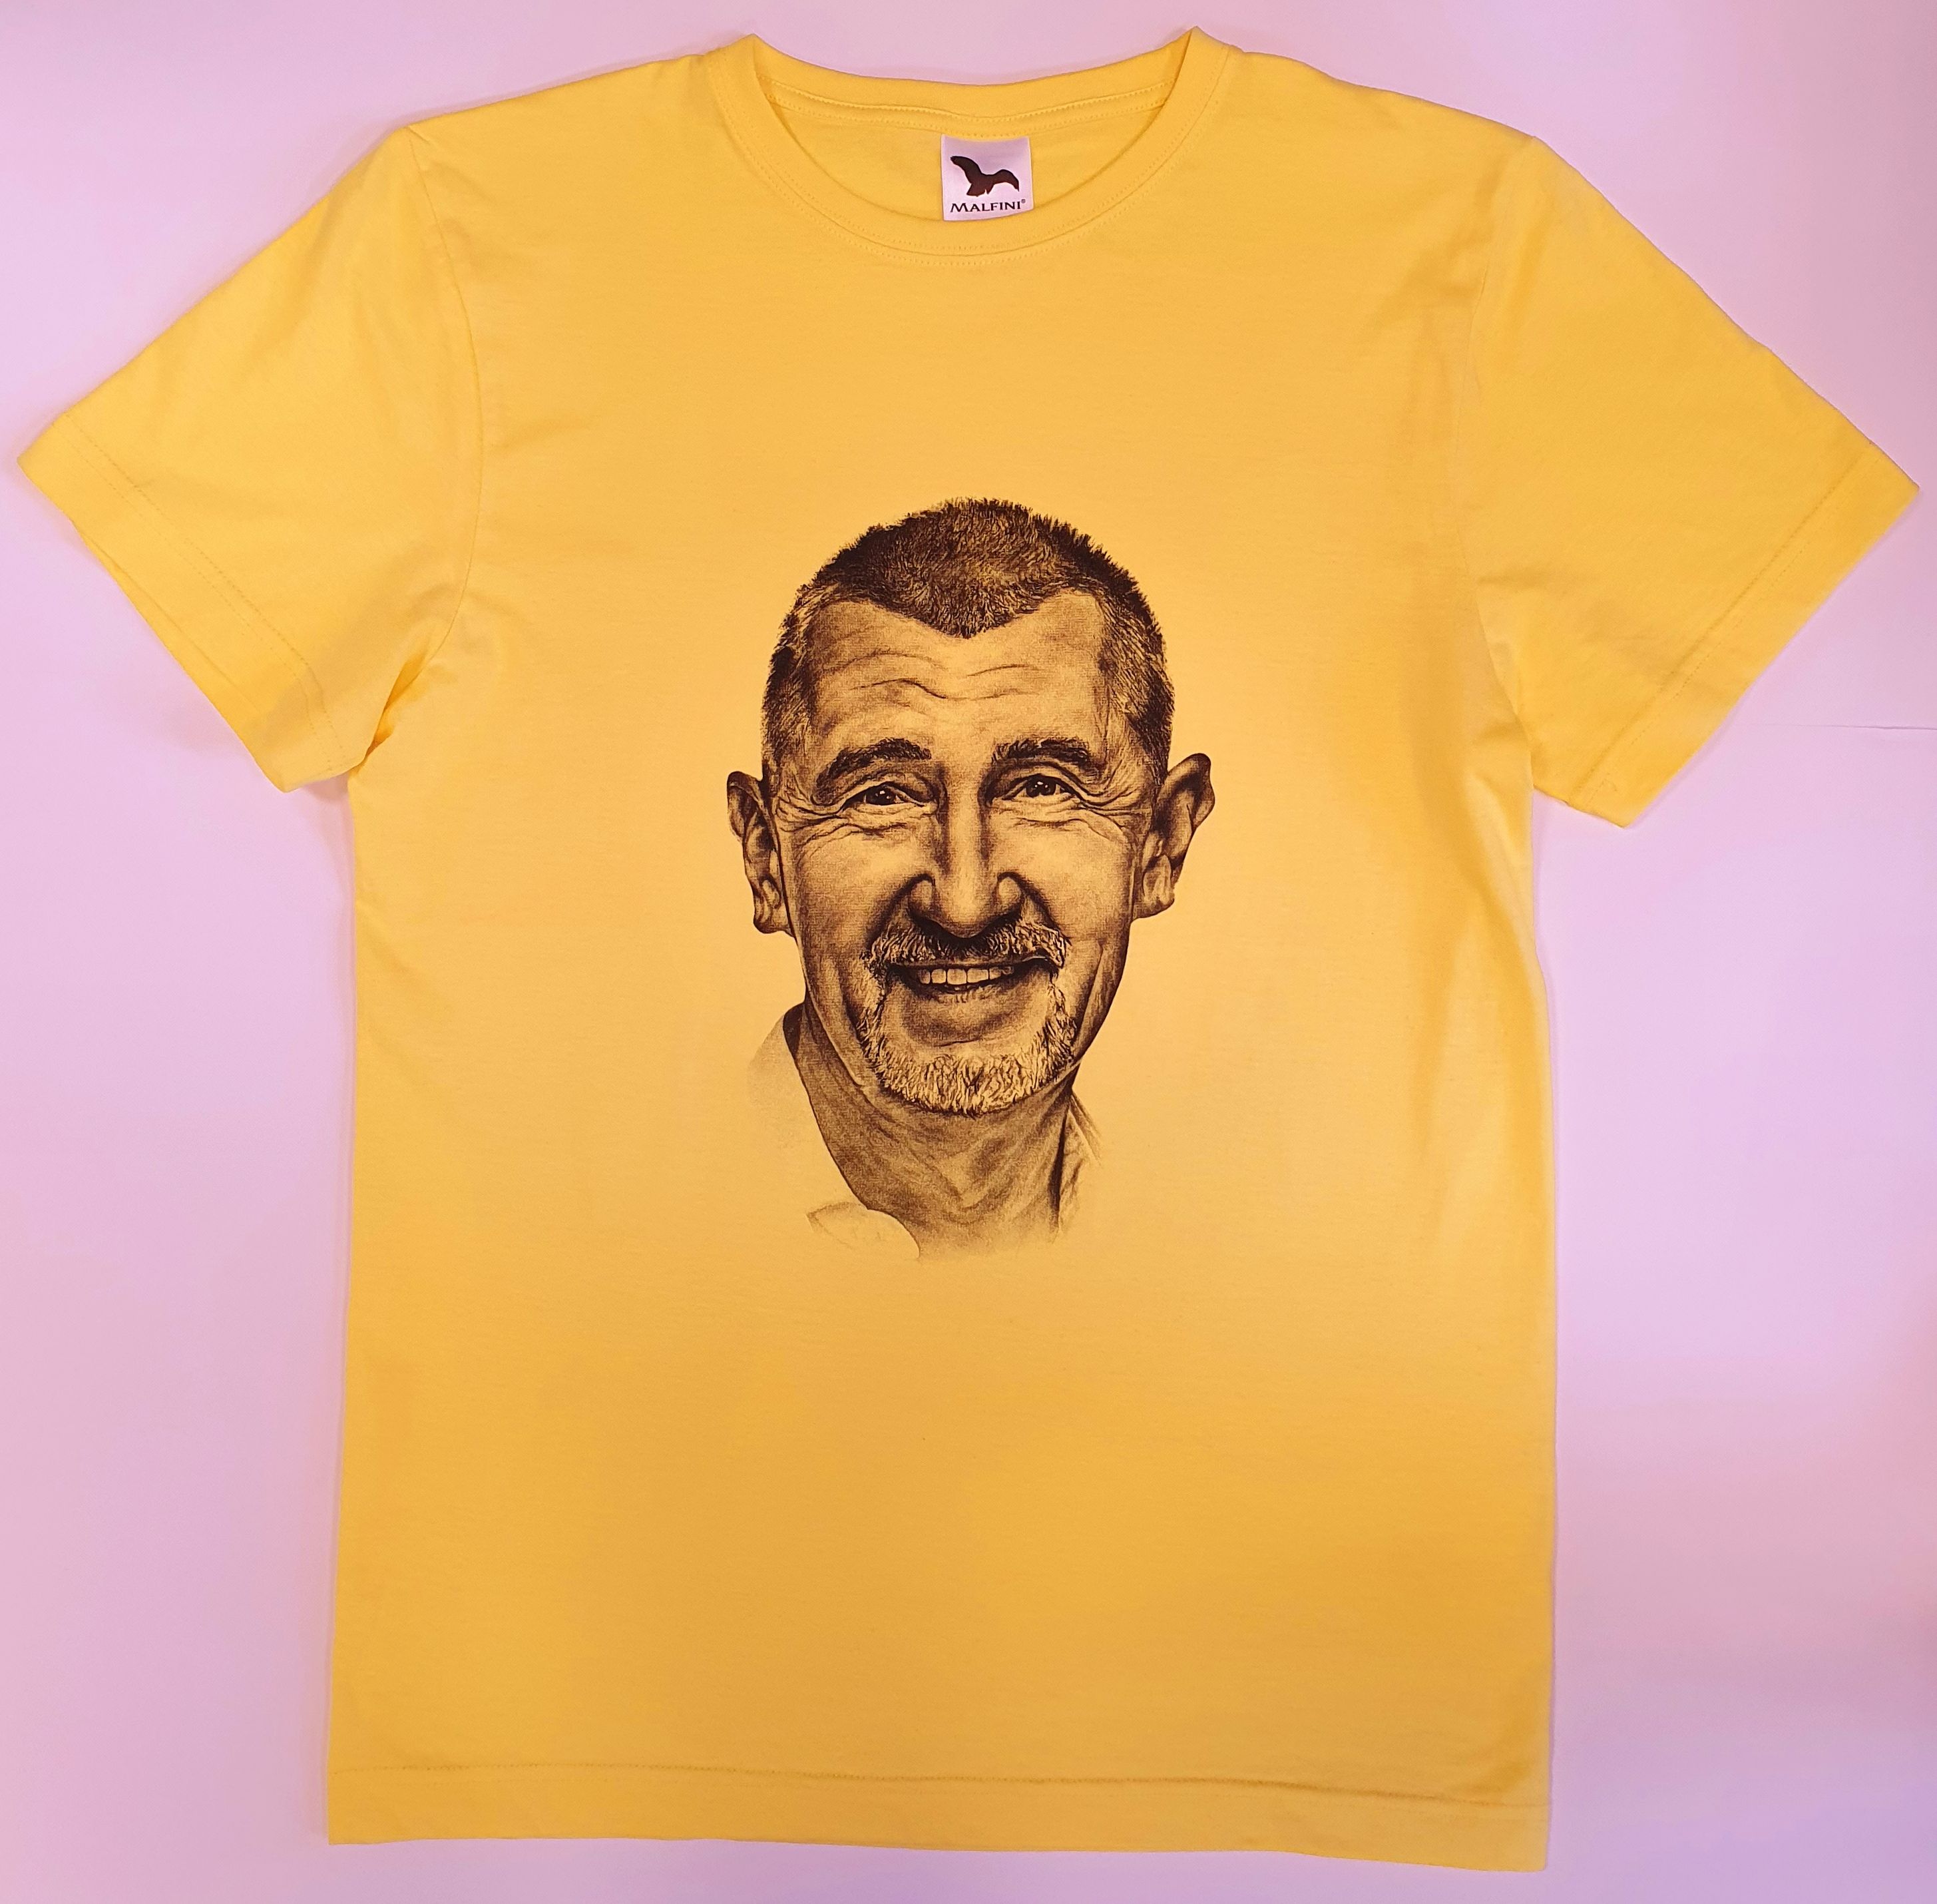 Tričko s potiskem Andrej Babiš - žlutá